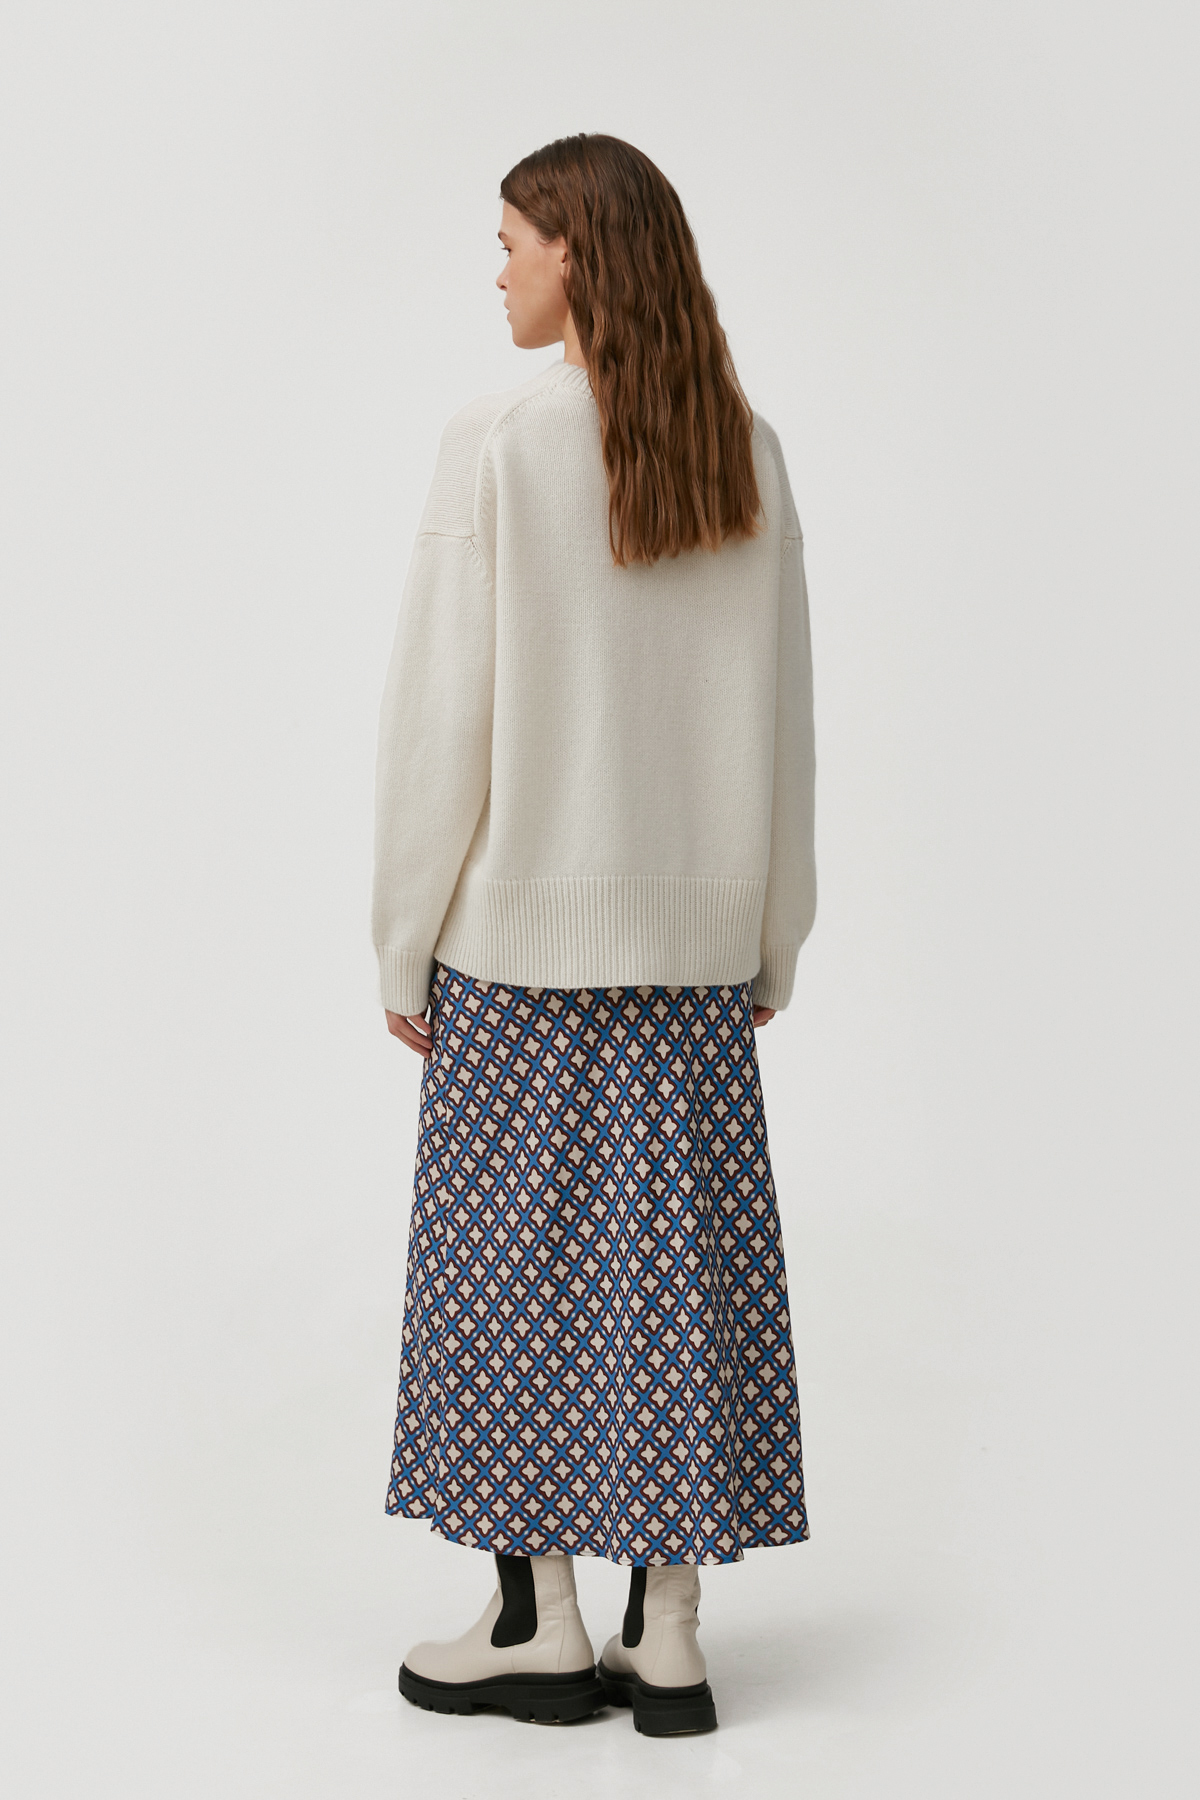 Blue elongated midi tencel skirt with geometric print, photo 5